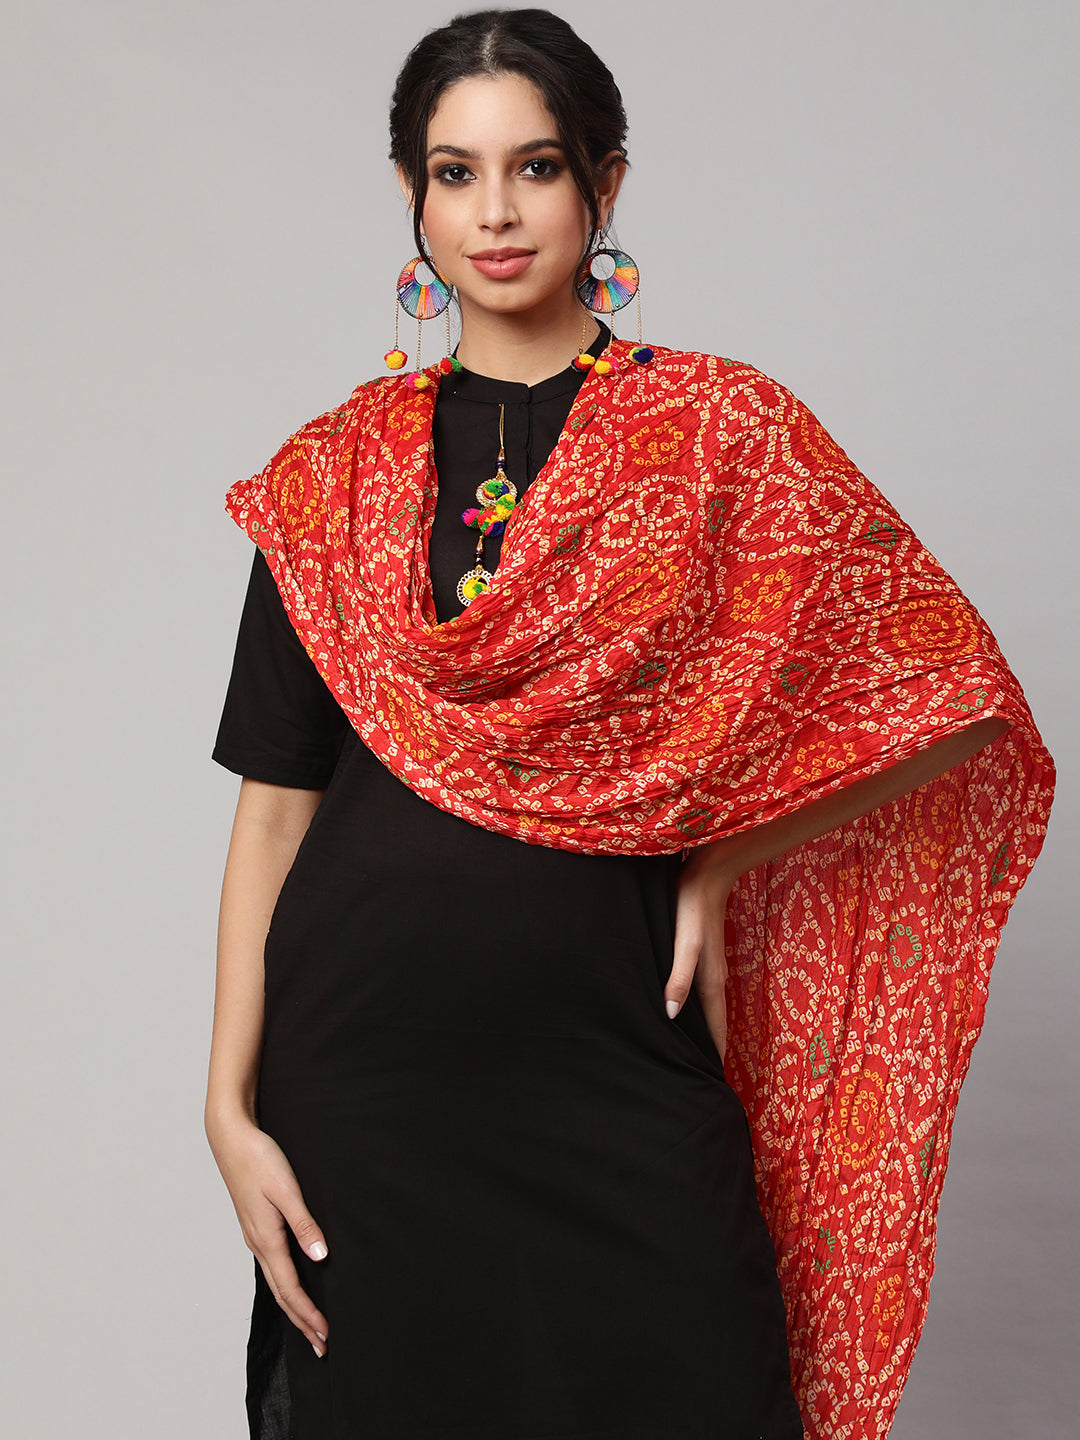 Women's Blue Bandhini And Red Bandhani Dupatta Combo, Pack Of Two - Nayo Clothing